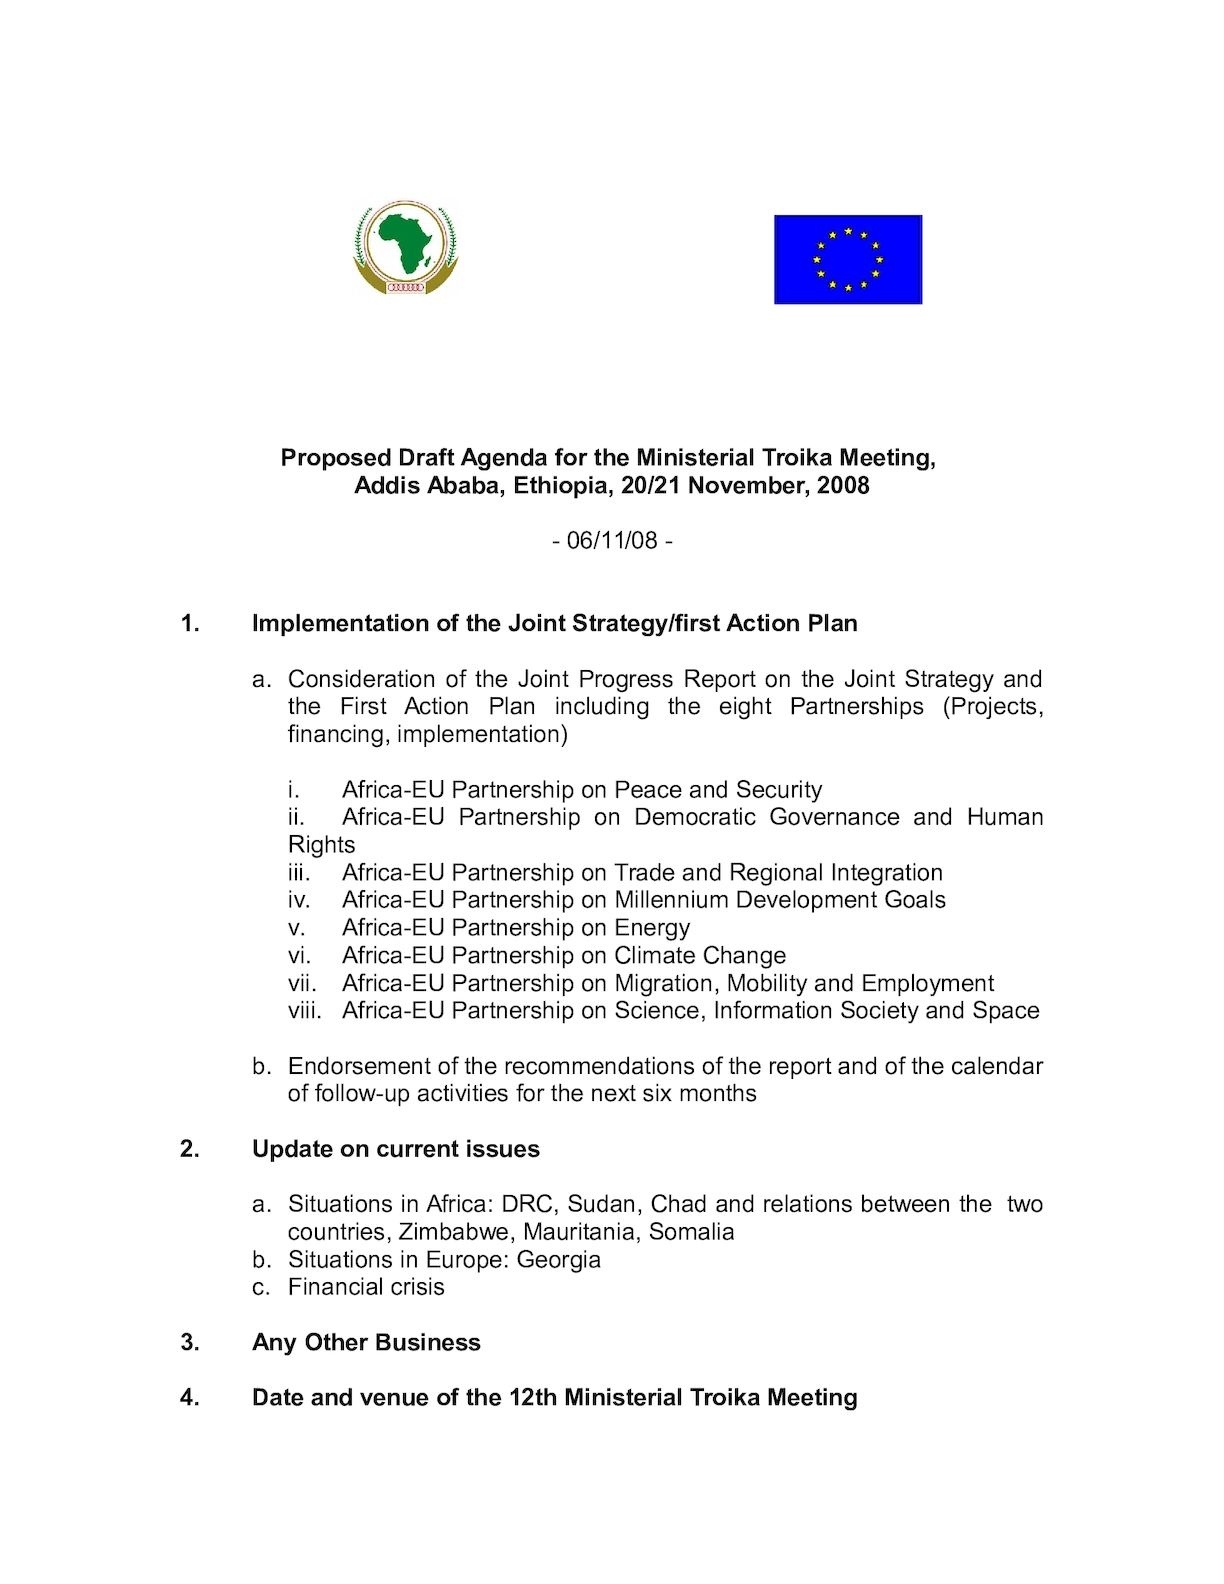 081105 Draft Agenda For Addis Ministerial Troika - Calameo Downloader 2 Calendar Month Endorsement